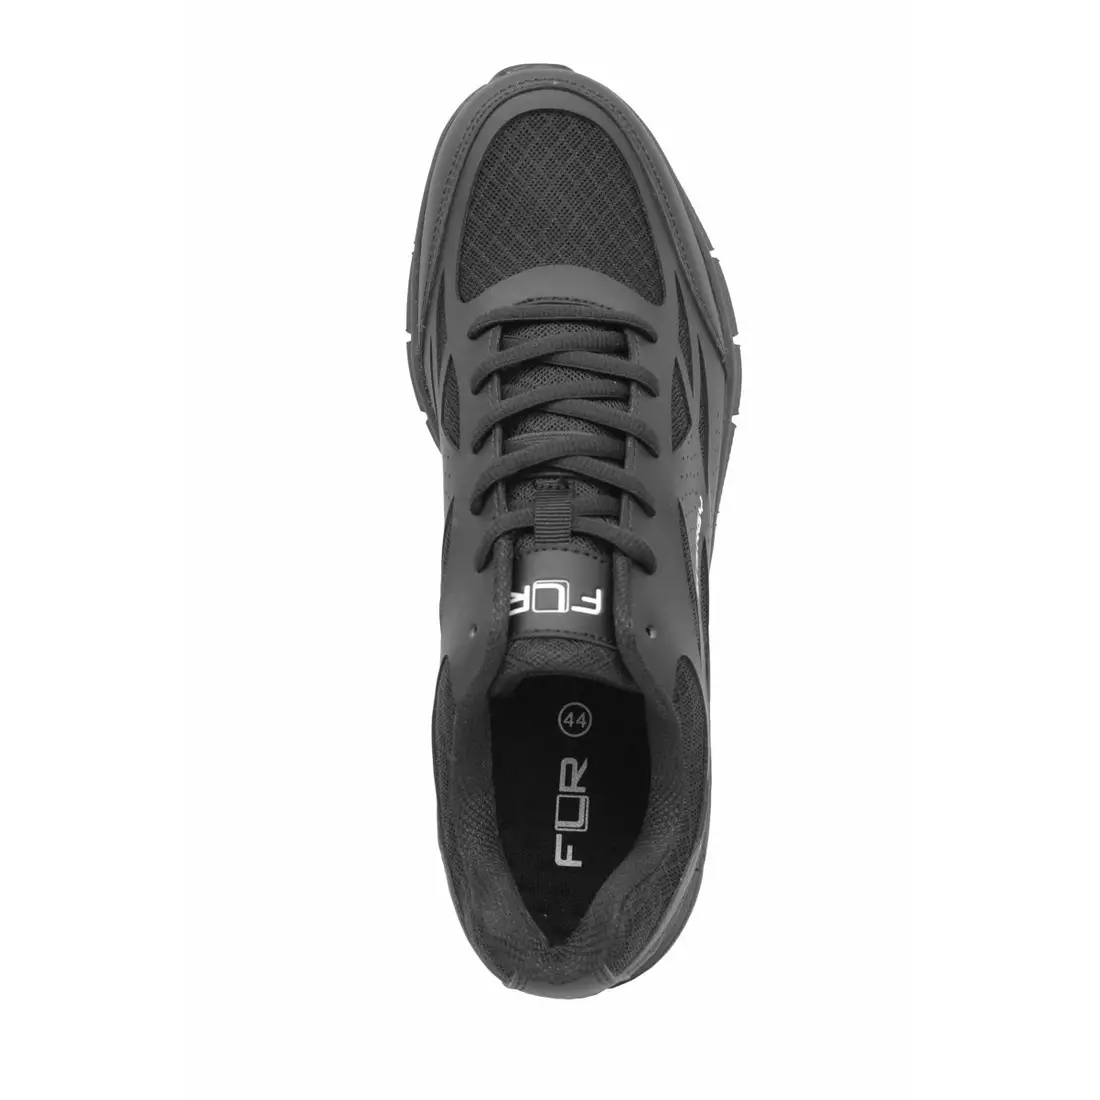 FLR ENERGY hiking shoes black